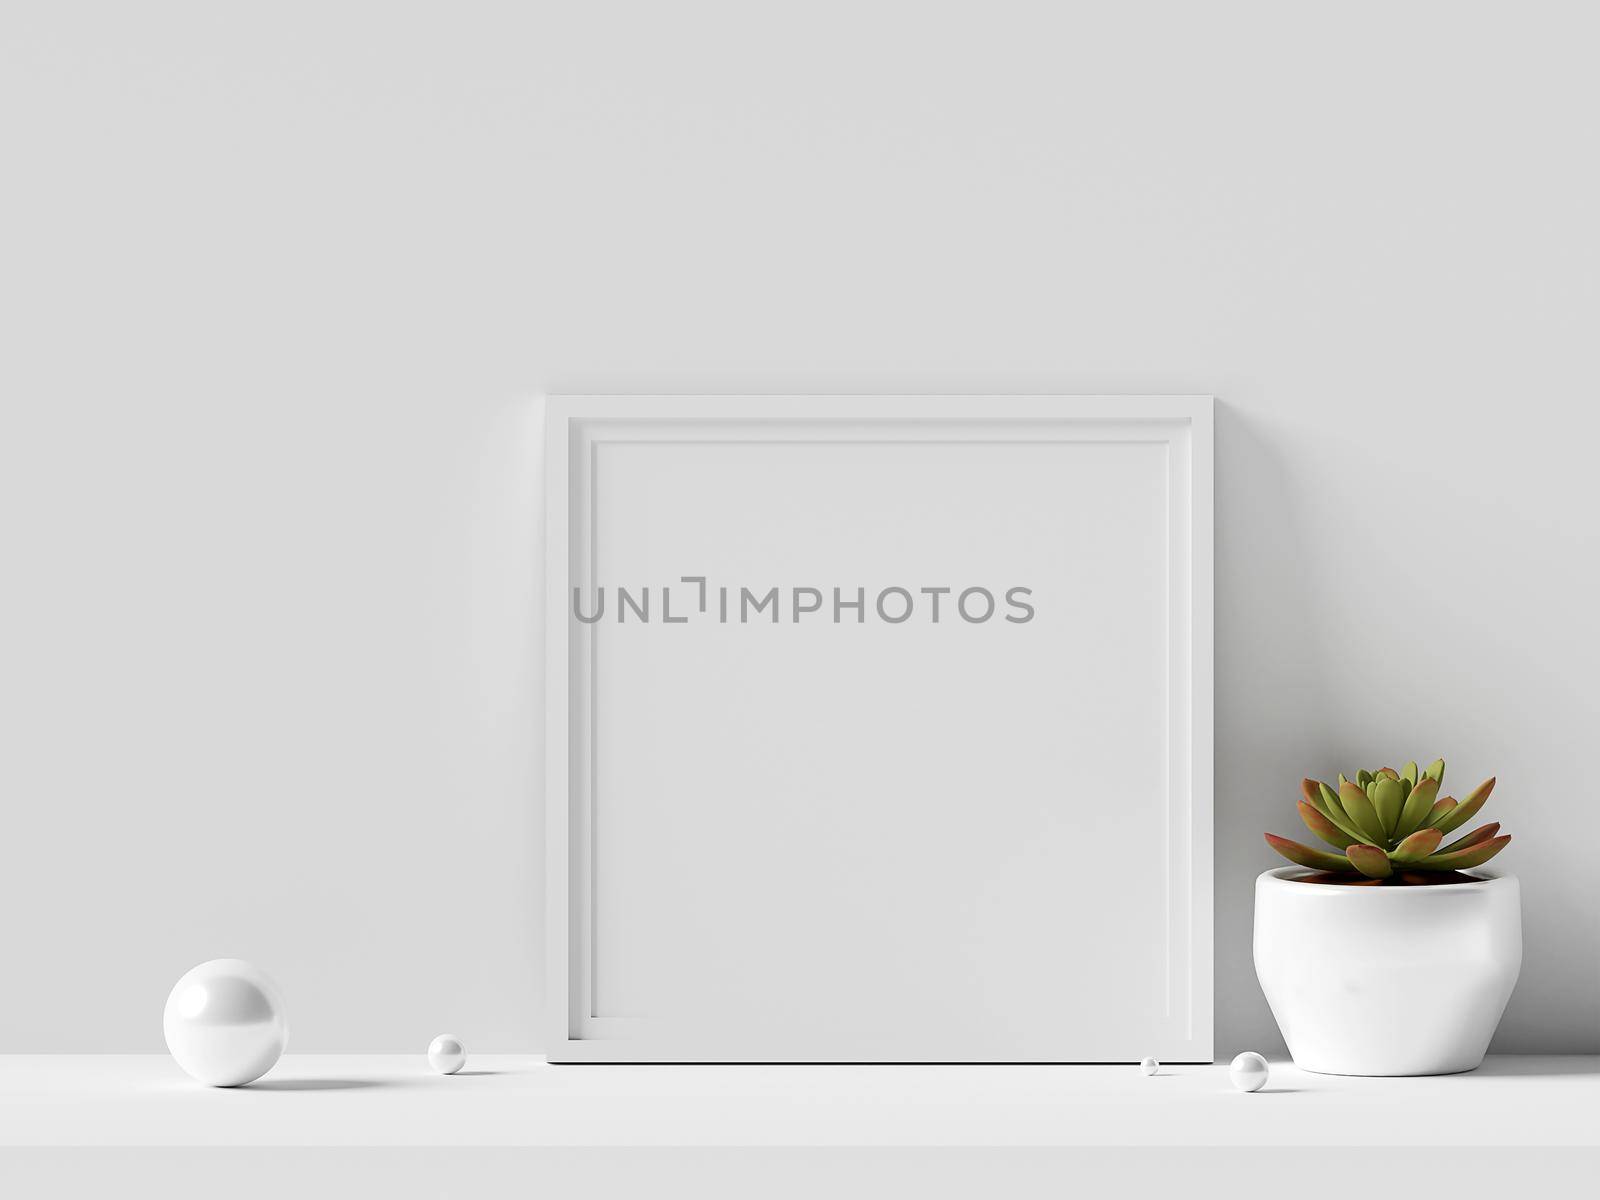 Minimal photo frame mockup with plant, 3d illustration by nutzchotwarut